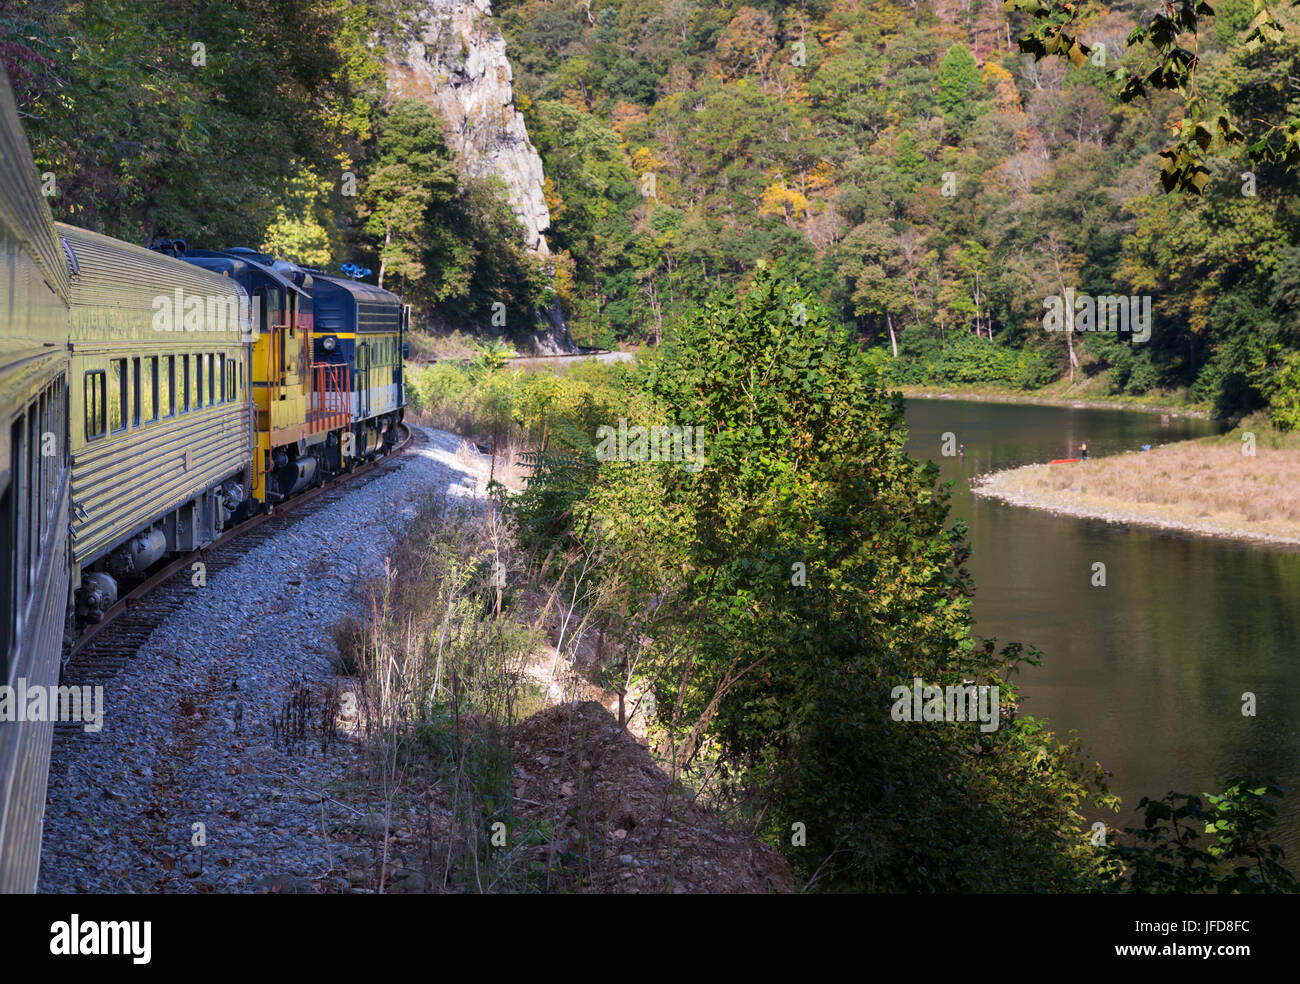 Diesel engine on train trip up gorge Stock Photo